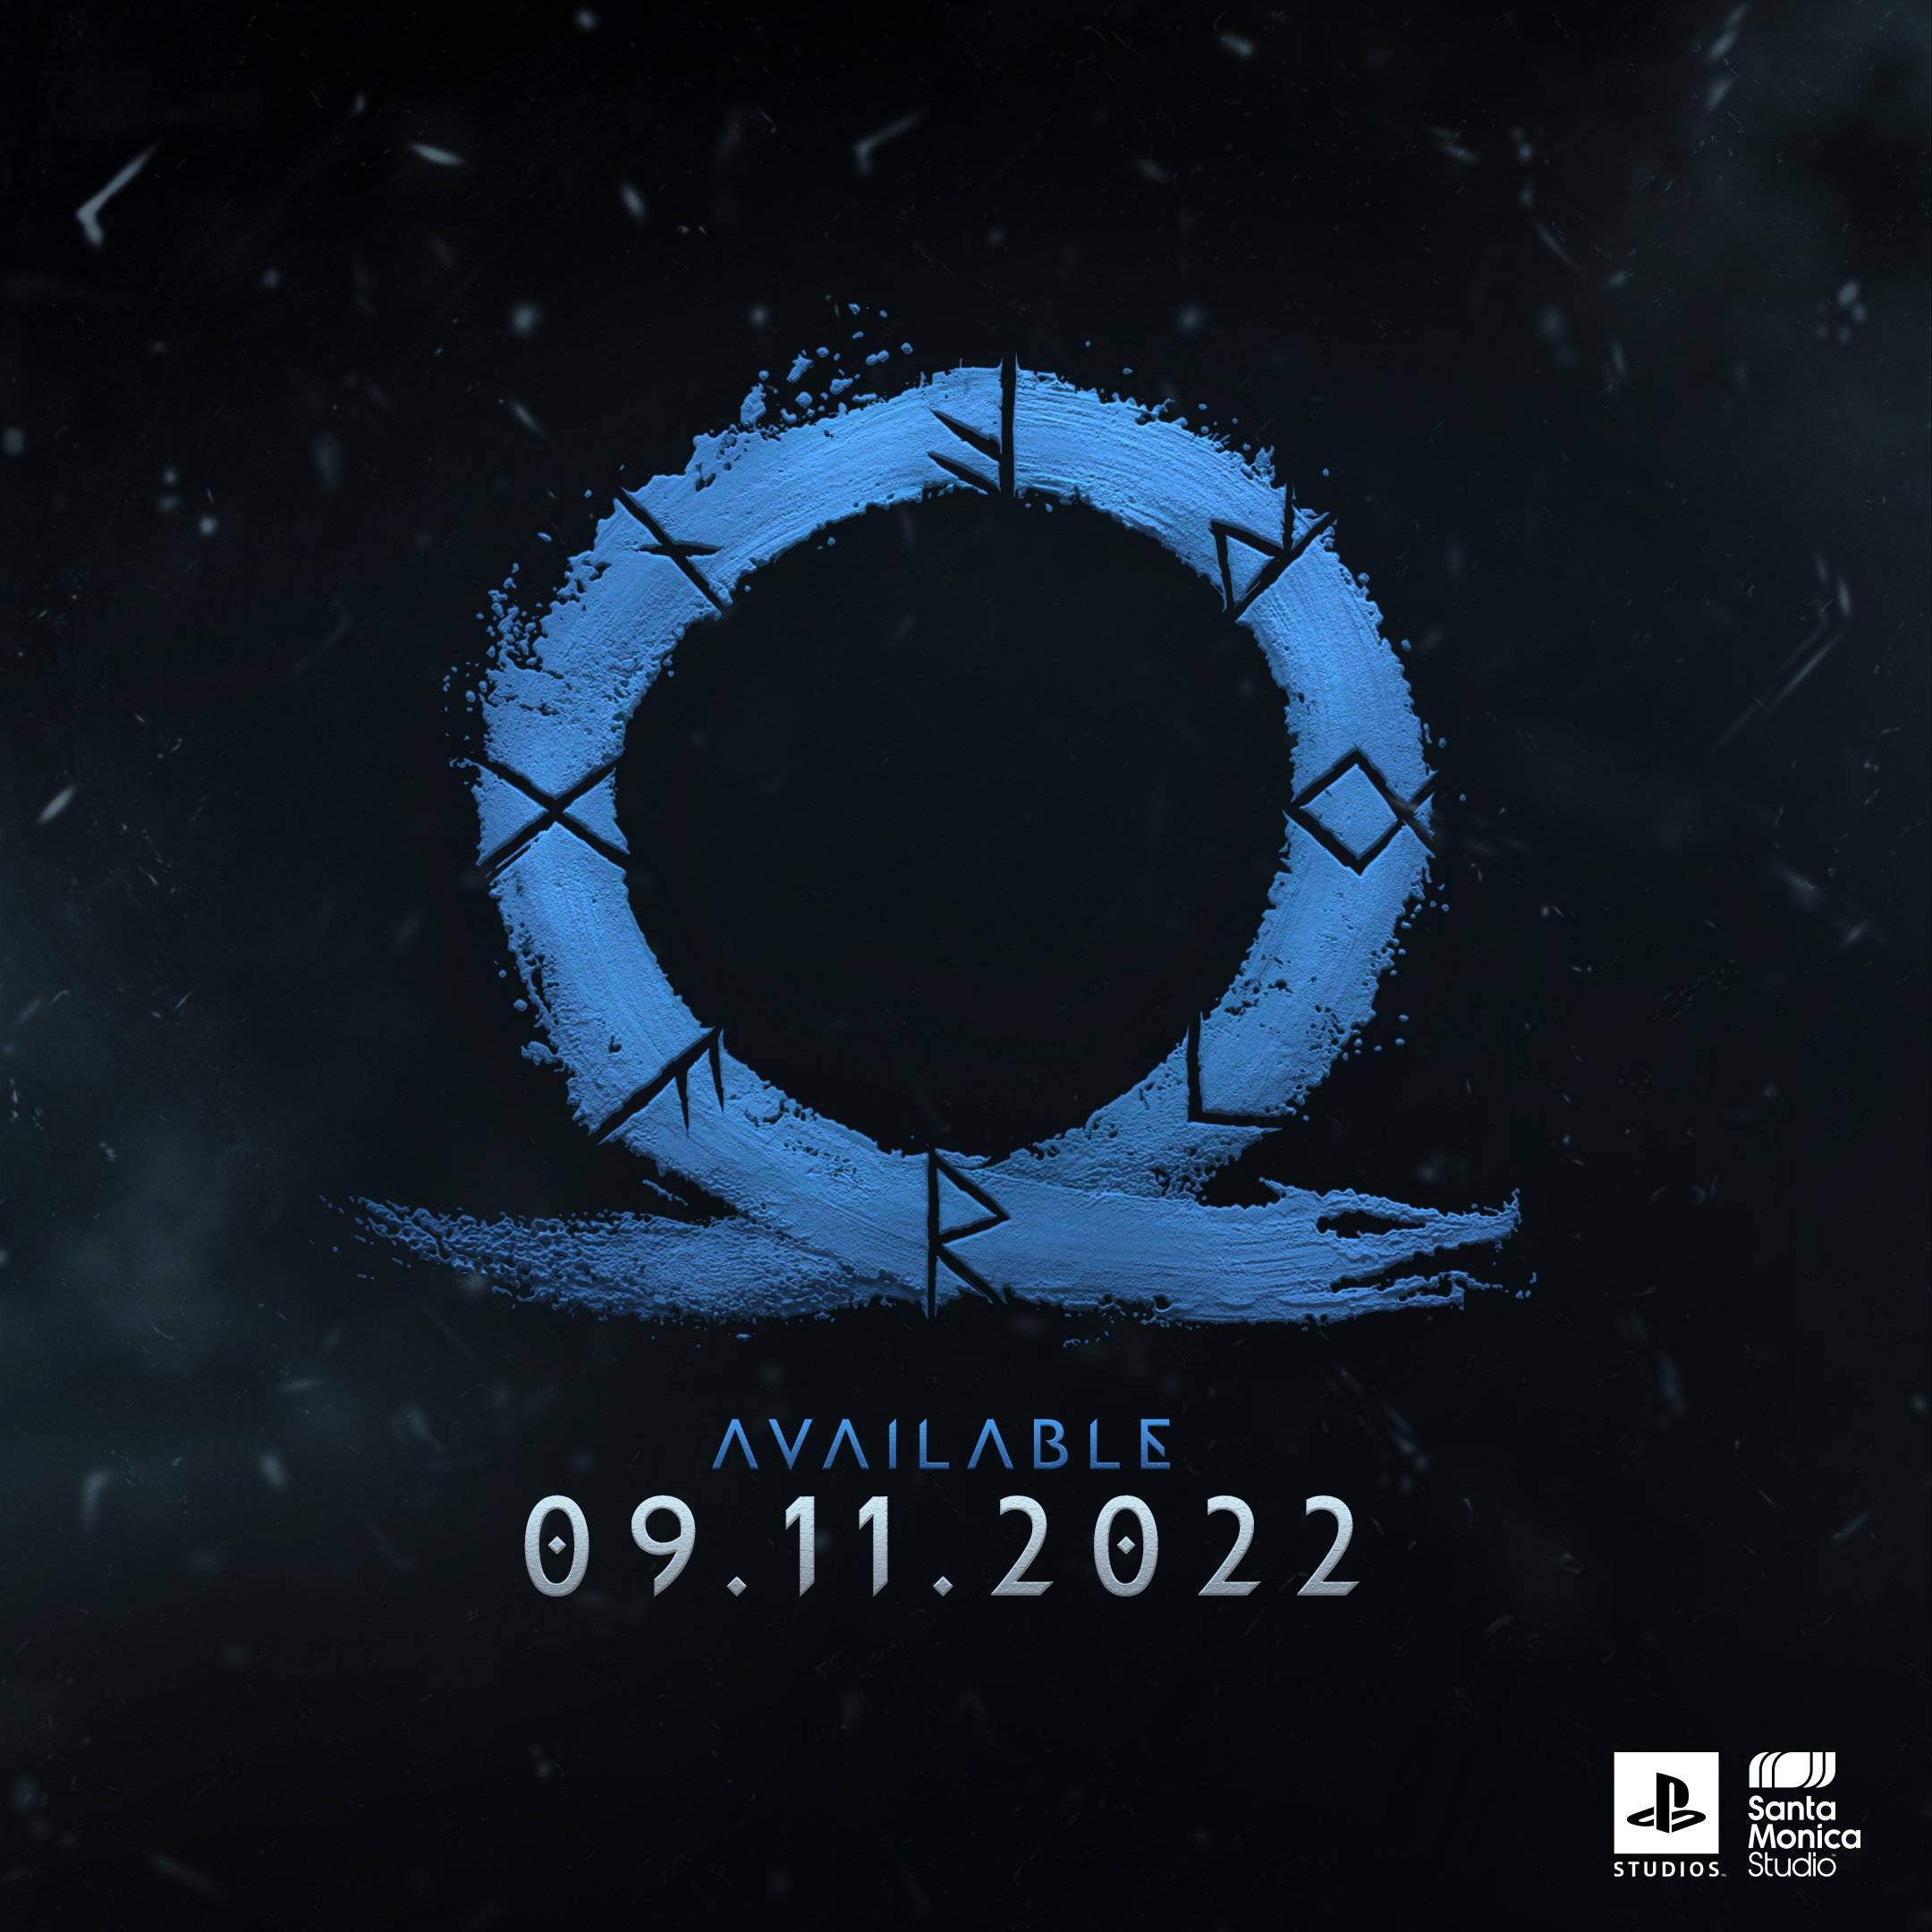 Confirmado: God of War Ragnarök será lançado no dia 9 de novembro